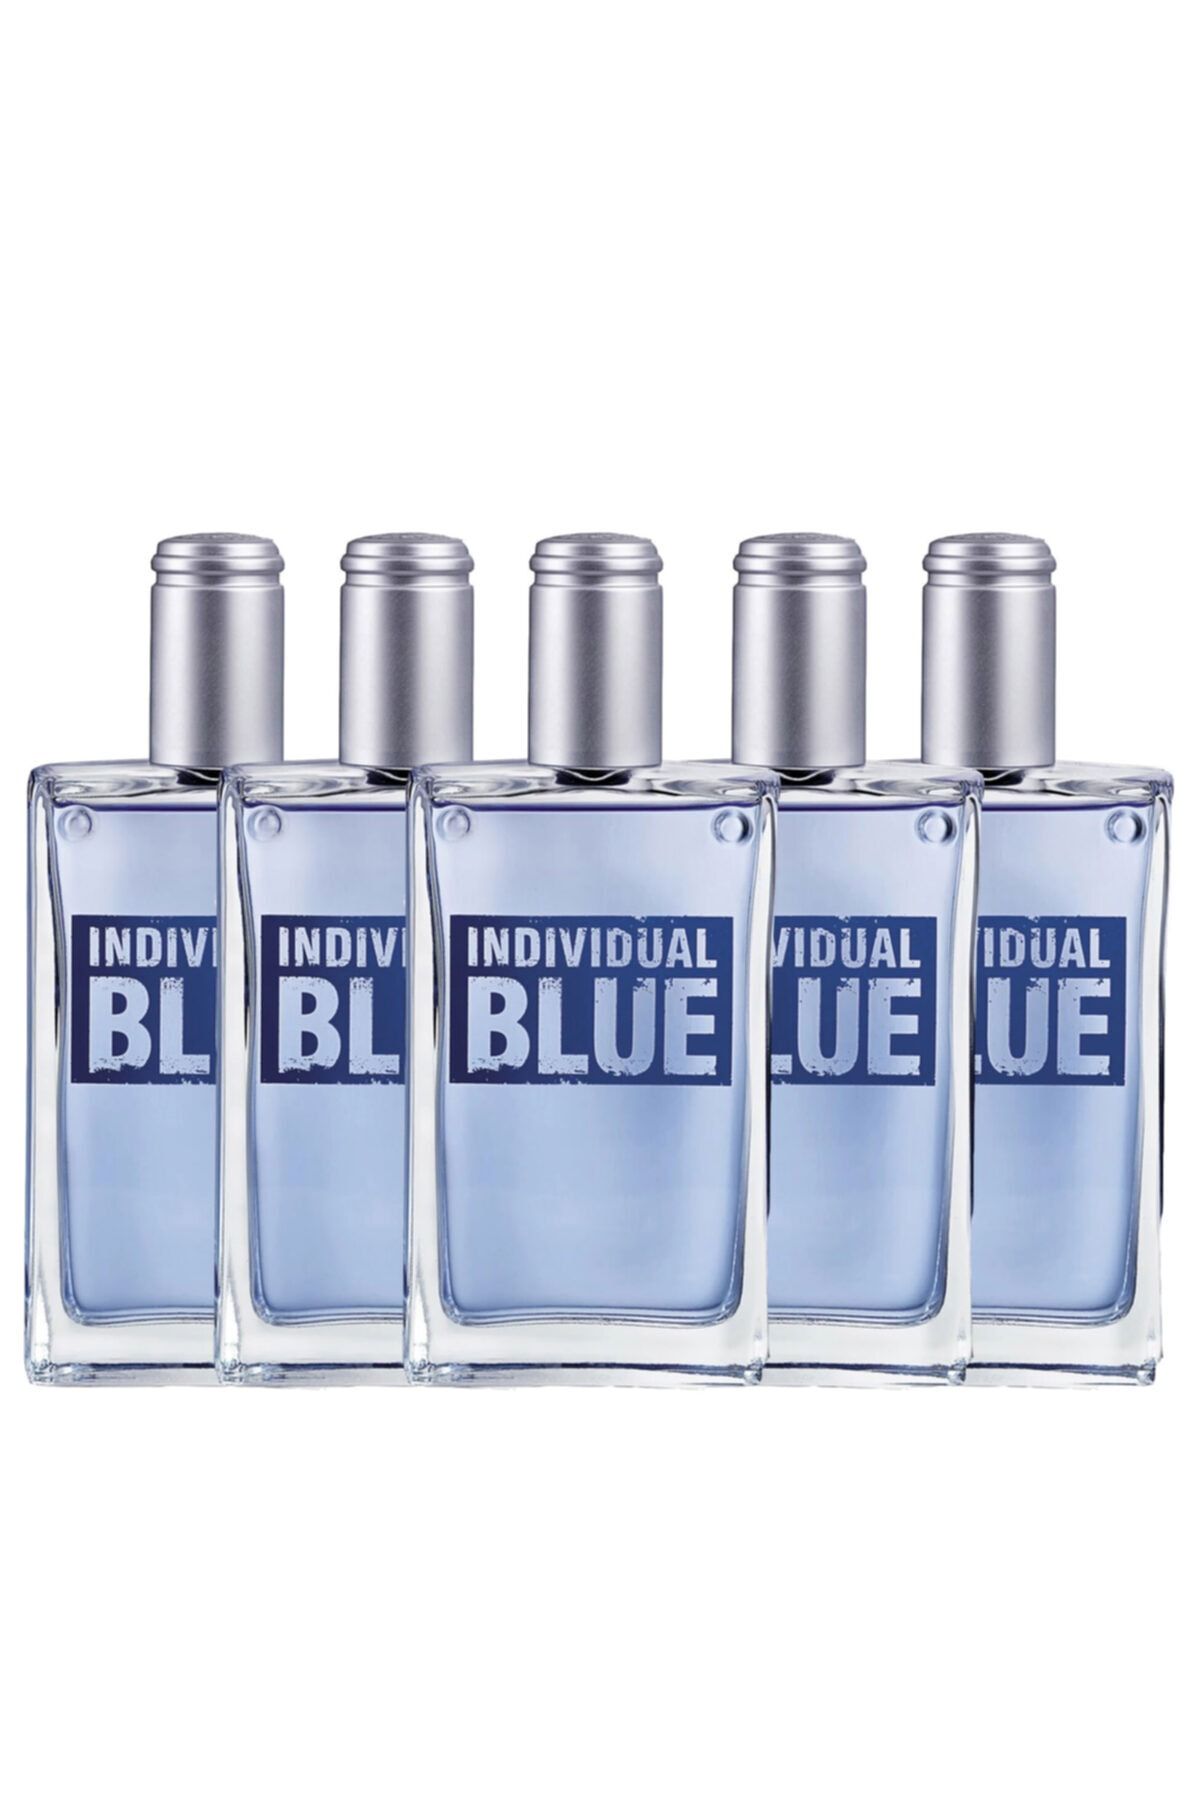 Avon Individual Blue Edt 100 ml Erkek Parfümü ELİTKOZMETİK-560023 5 Adet